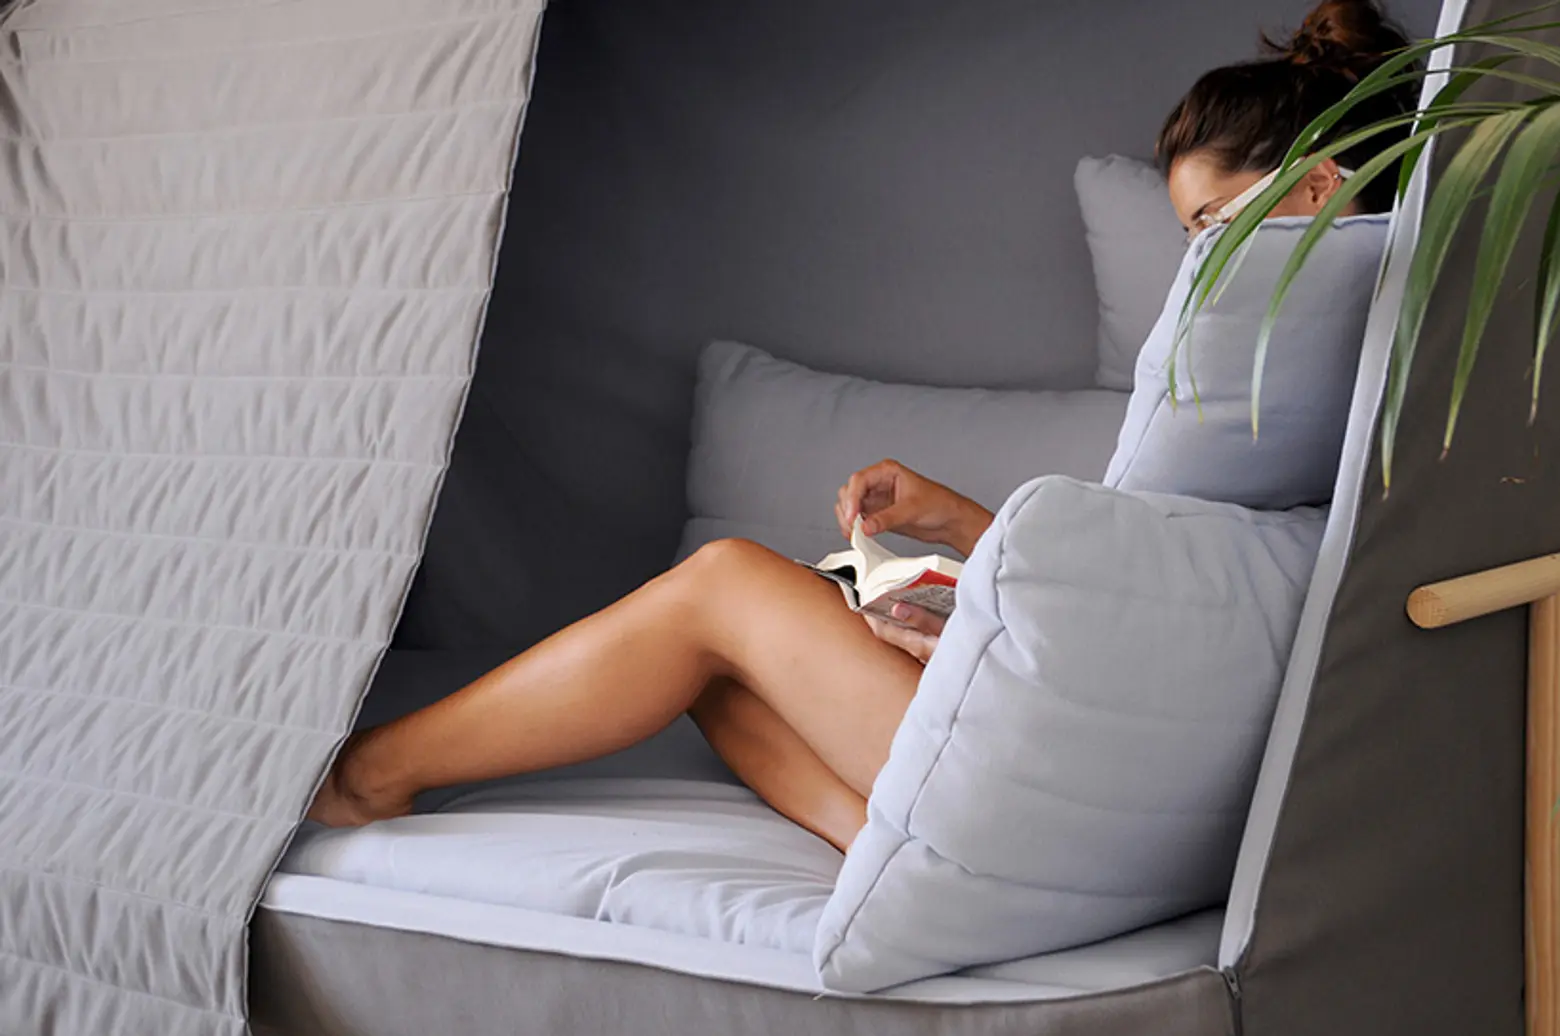 http://thumbs.6sqft.com/wp-content/uploads/2014/10/21024241/goula-figuera-orwell-sofa-bed-cabin-furniture-designboom-05.jpg?w=1560&format=webp